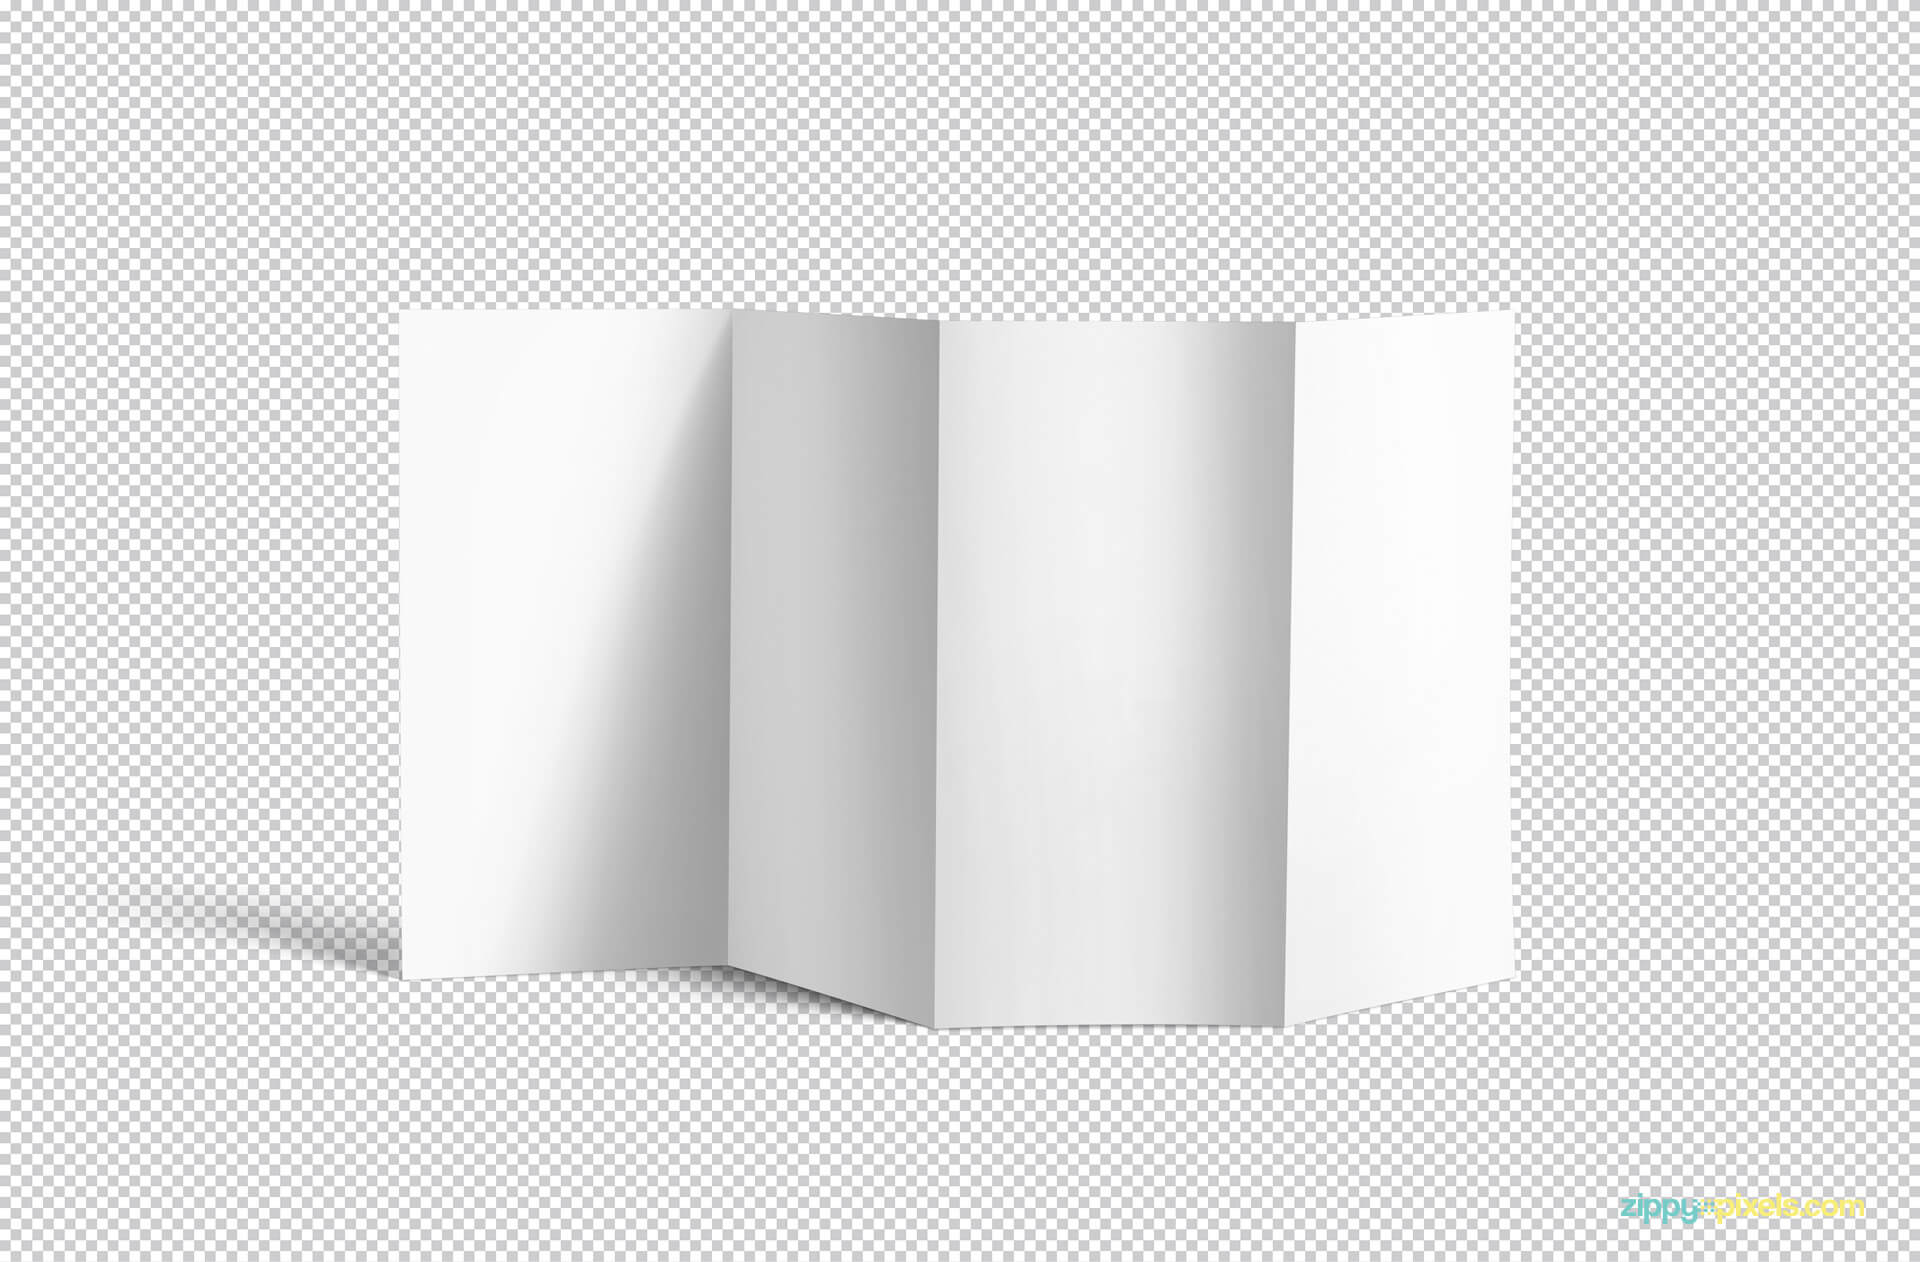 Free 4 Fold Brochure Mockup | Zippypixels Intended For 4 Fold Brochure Template